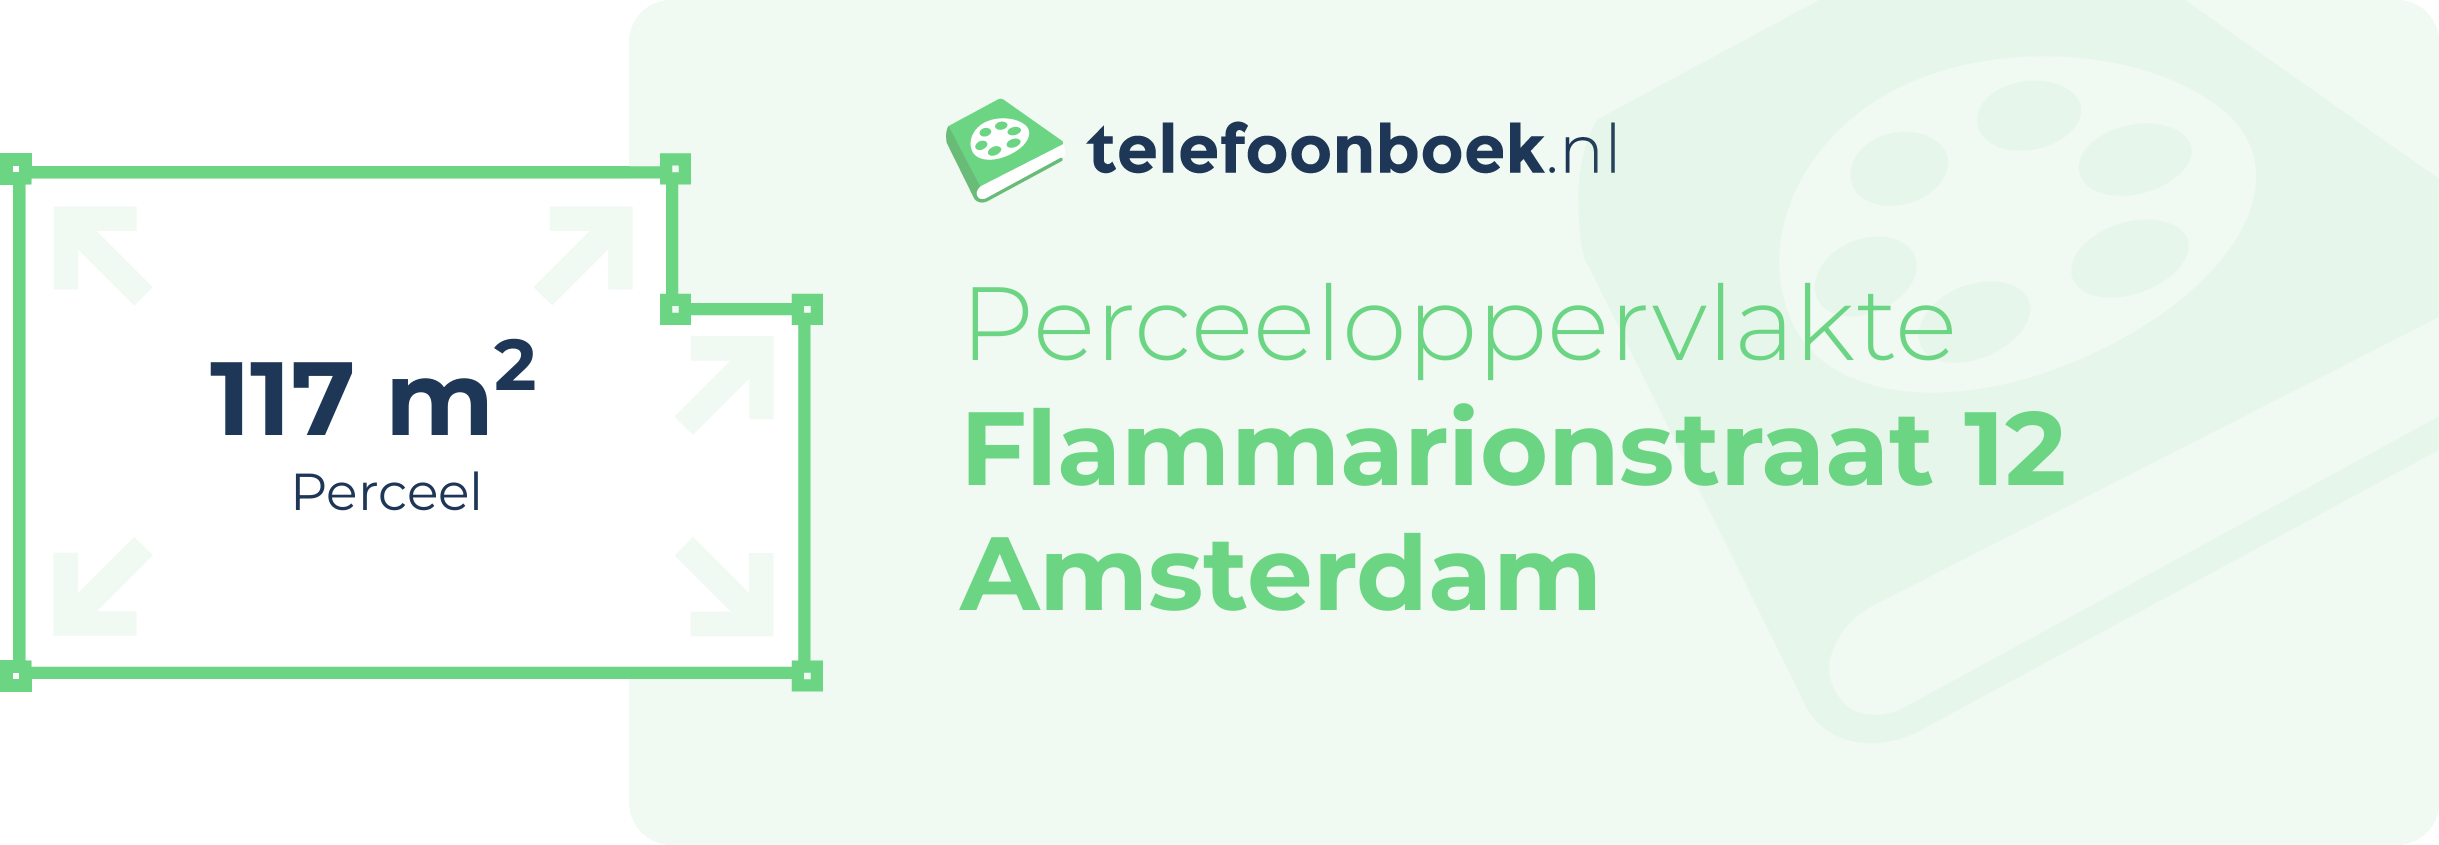 Perceeloppervlakte Flammarionstraat 12 Amsterdam